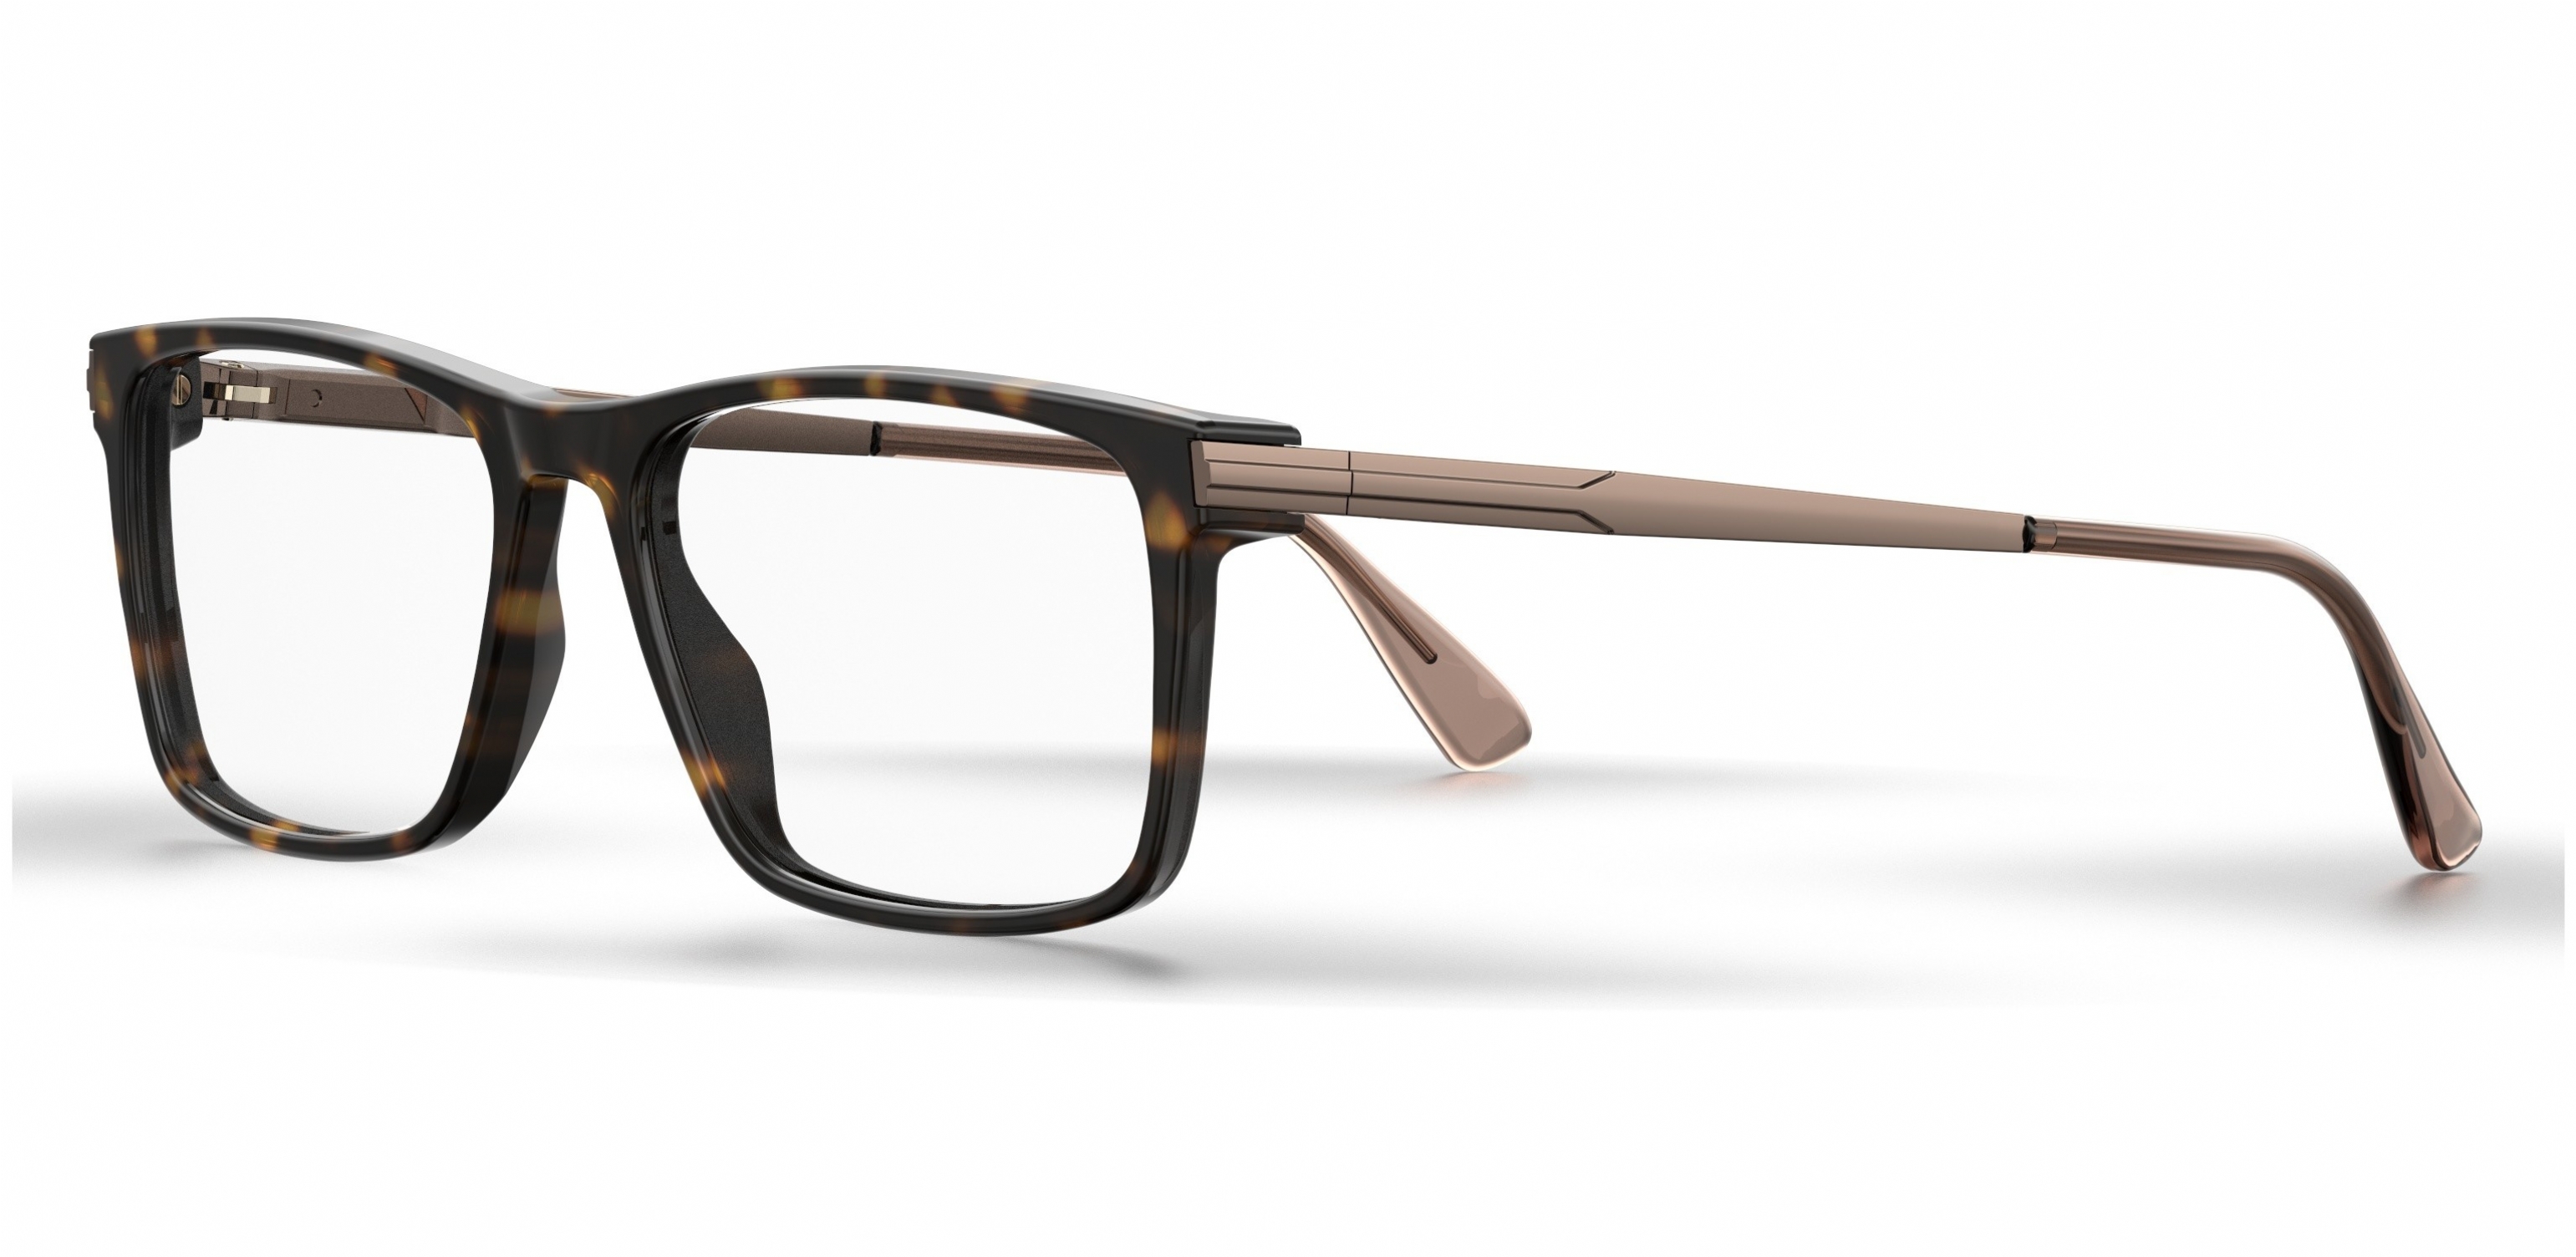 Buy Elasta Eyeglasses directly from OpticsFast.com